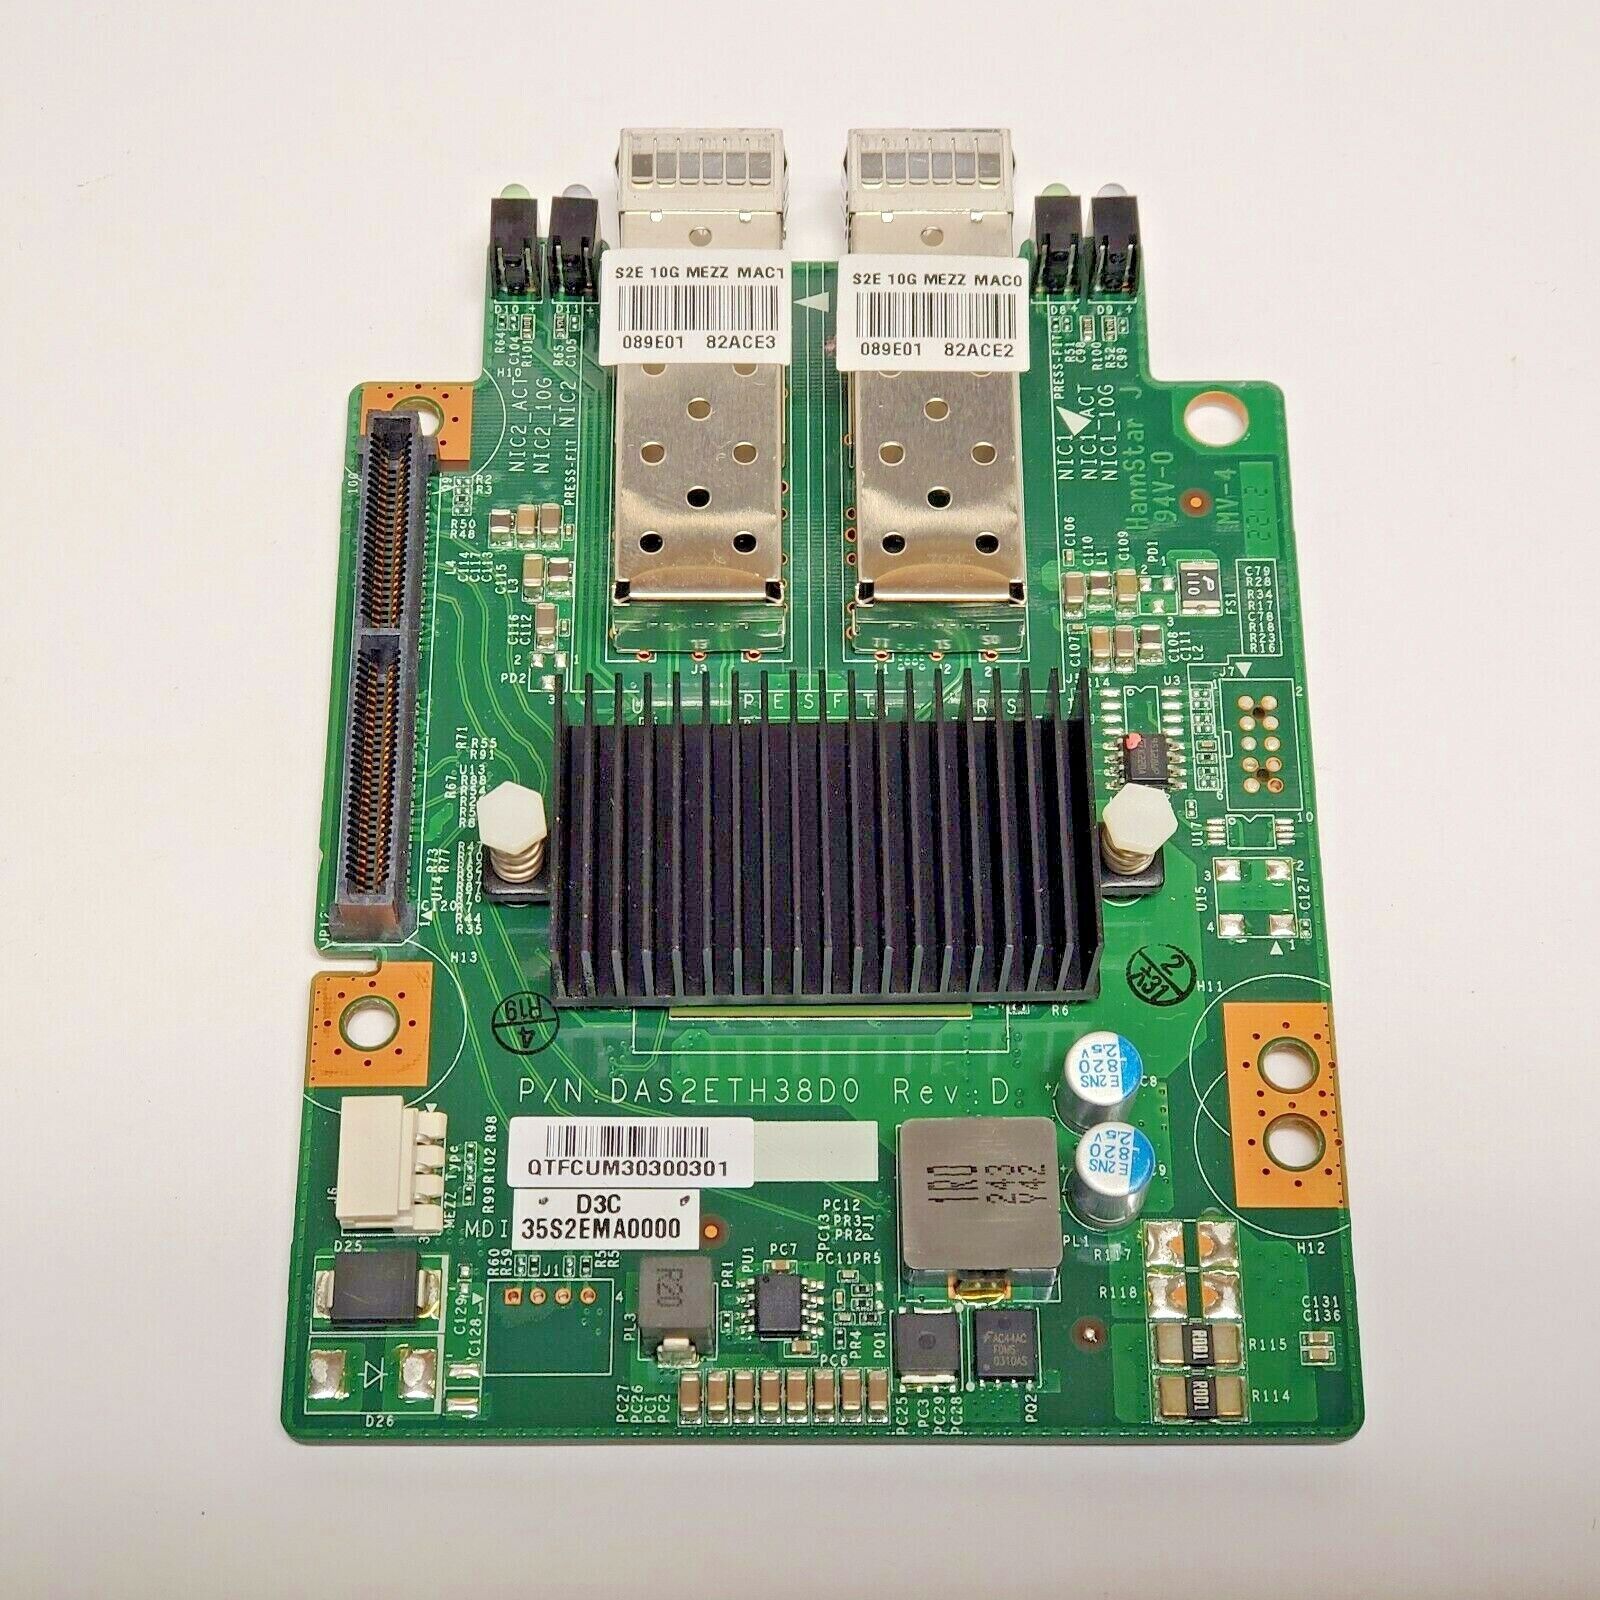 HANNSTAR DAS2ETH38D0 94V-0 2 PORT 10GB/S RAID CONTROLLER CARD